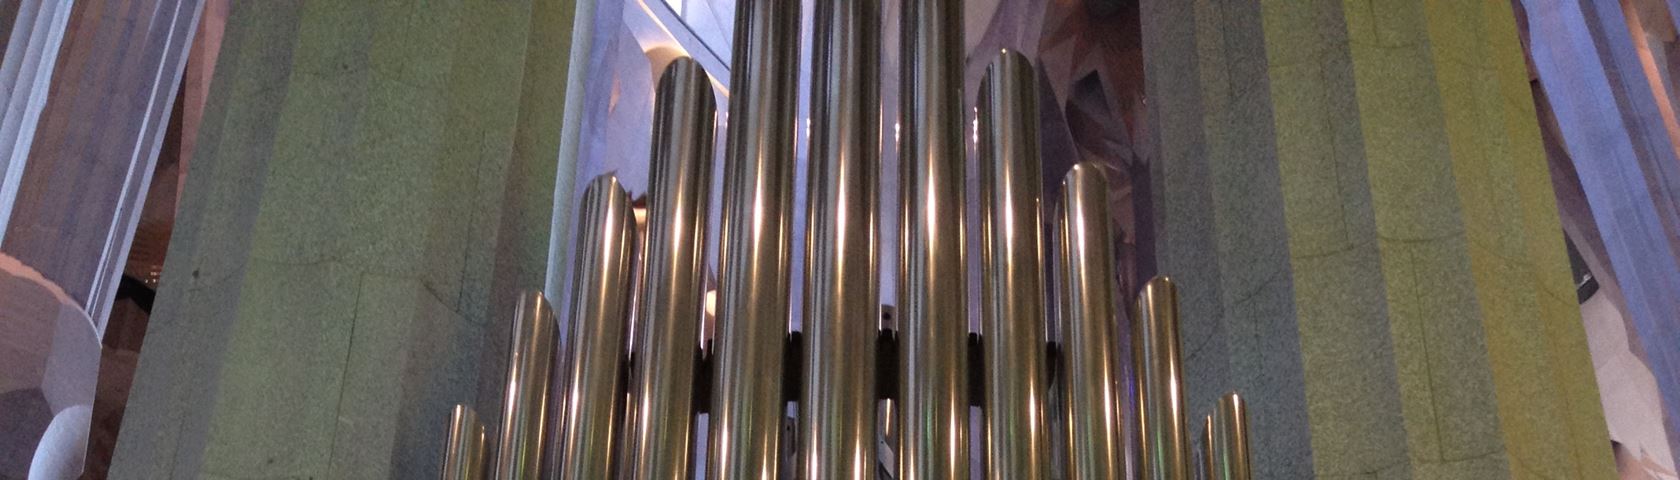 Organ Pipes - Sagrada Familia - Barcelona